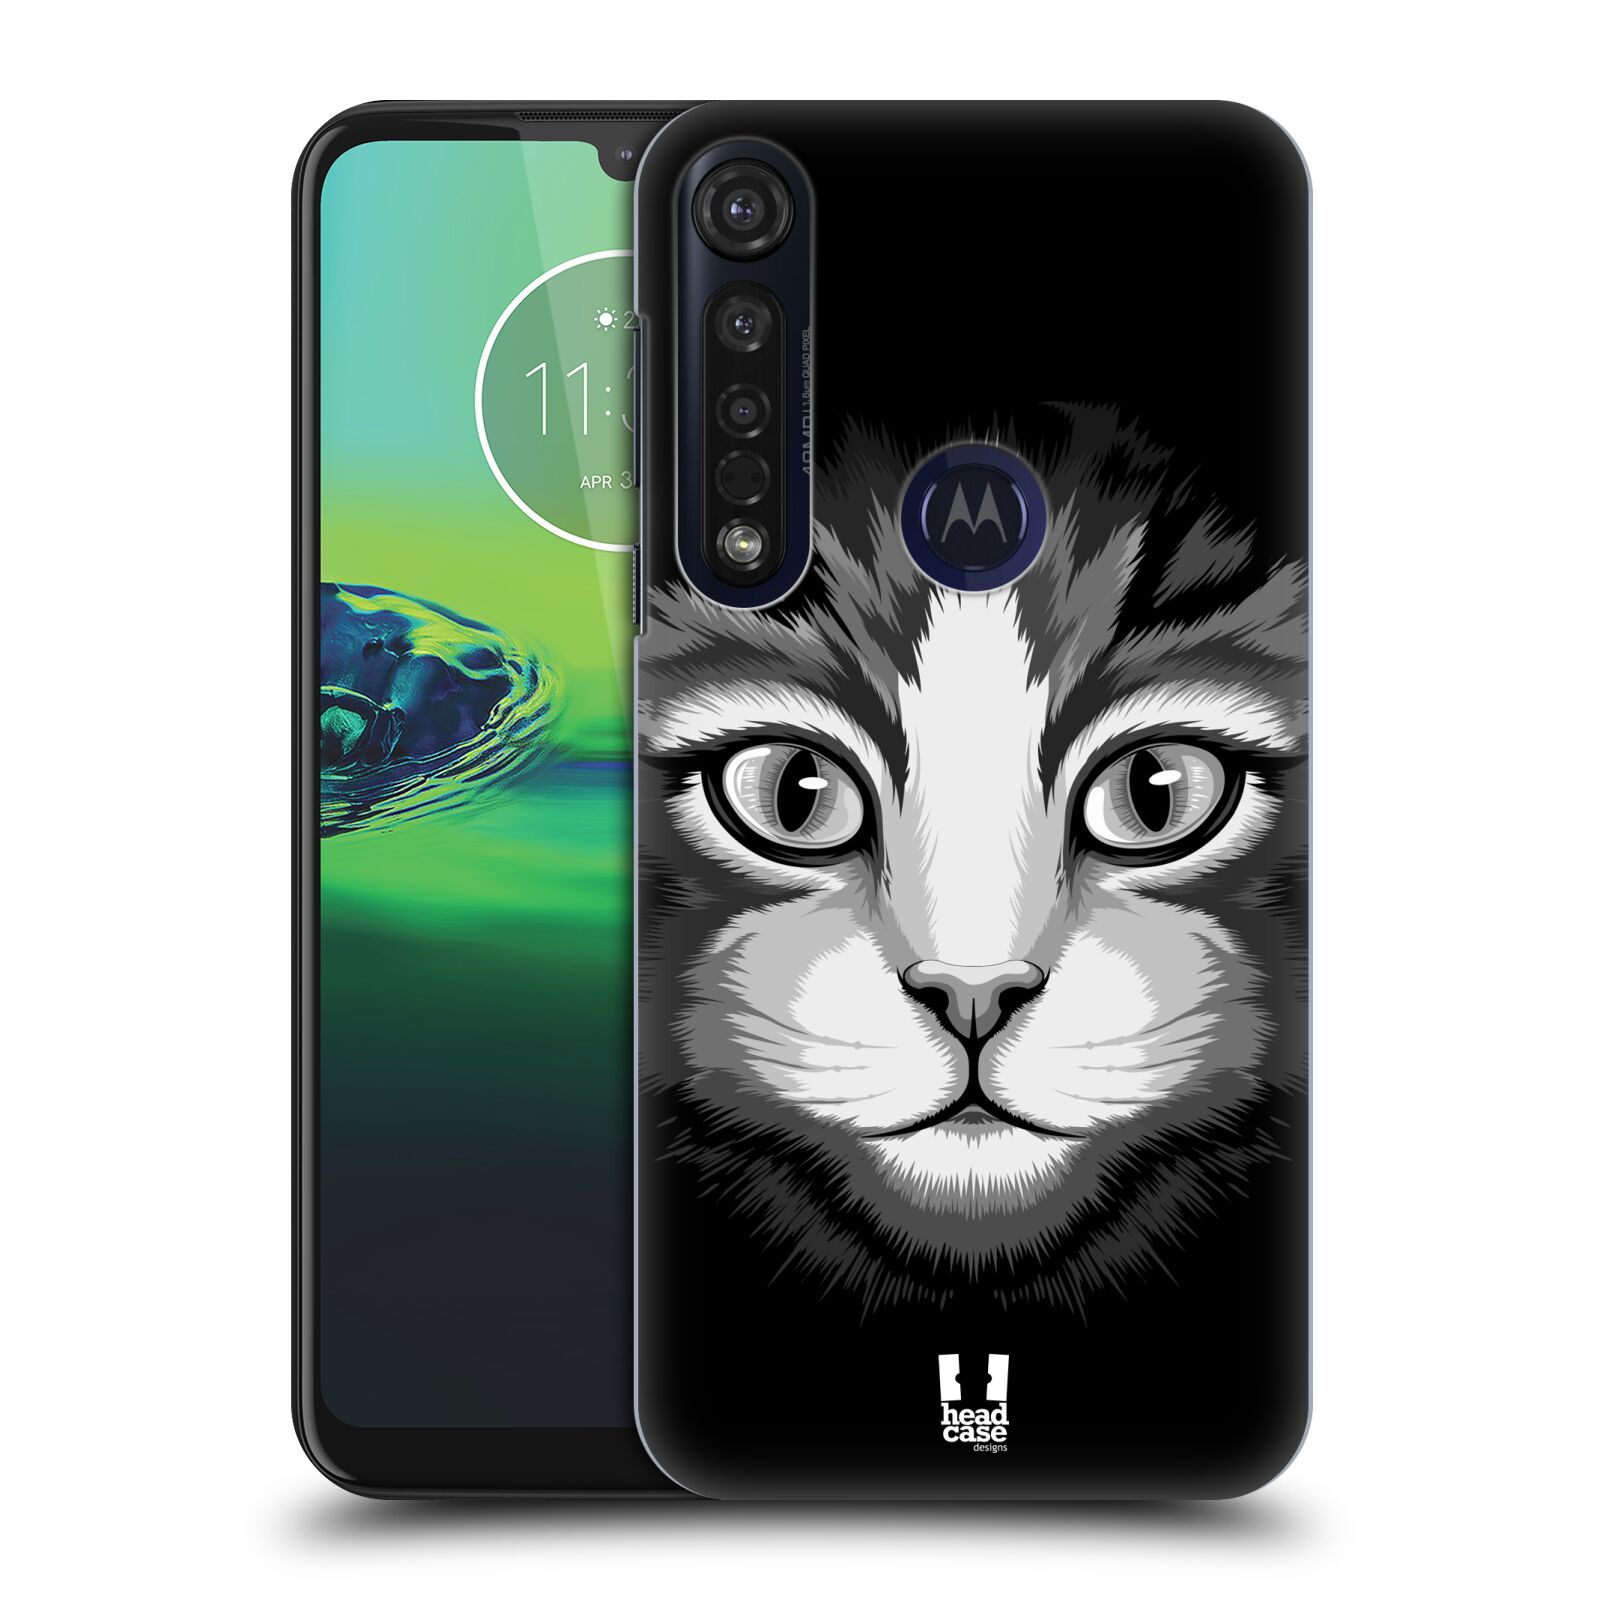 Pouzdro na mobil Motorola Moto G8 PLUS - HEAD CASE - vzor Zvíře kreslená tvář 2 kočička